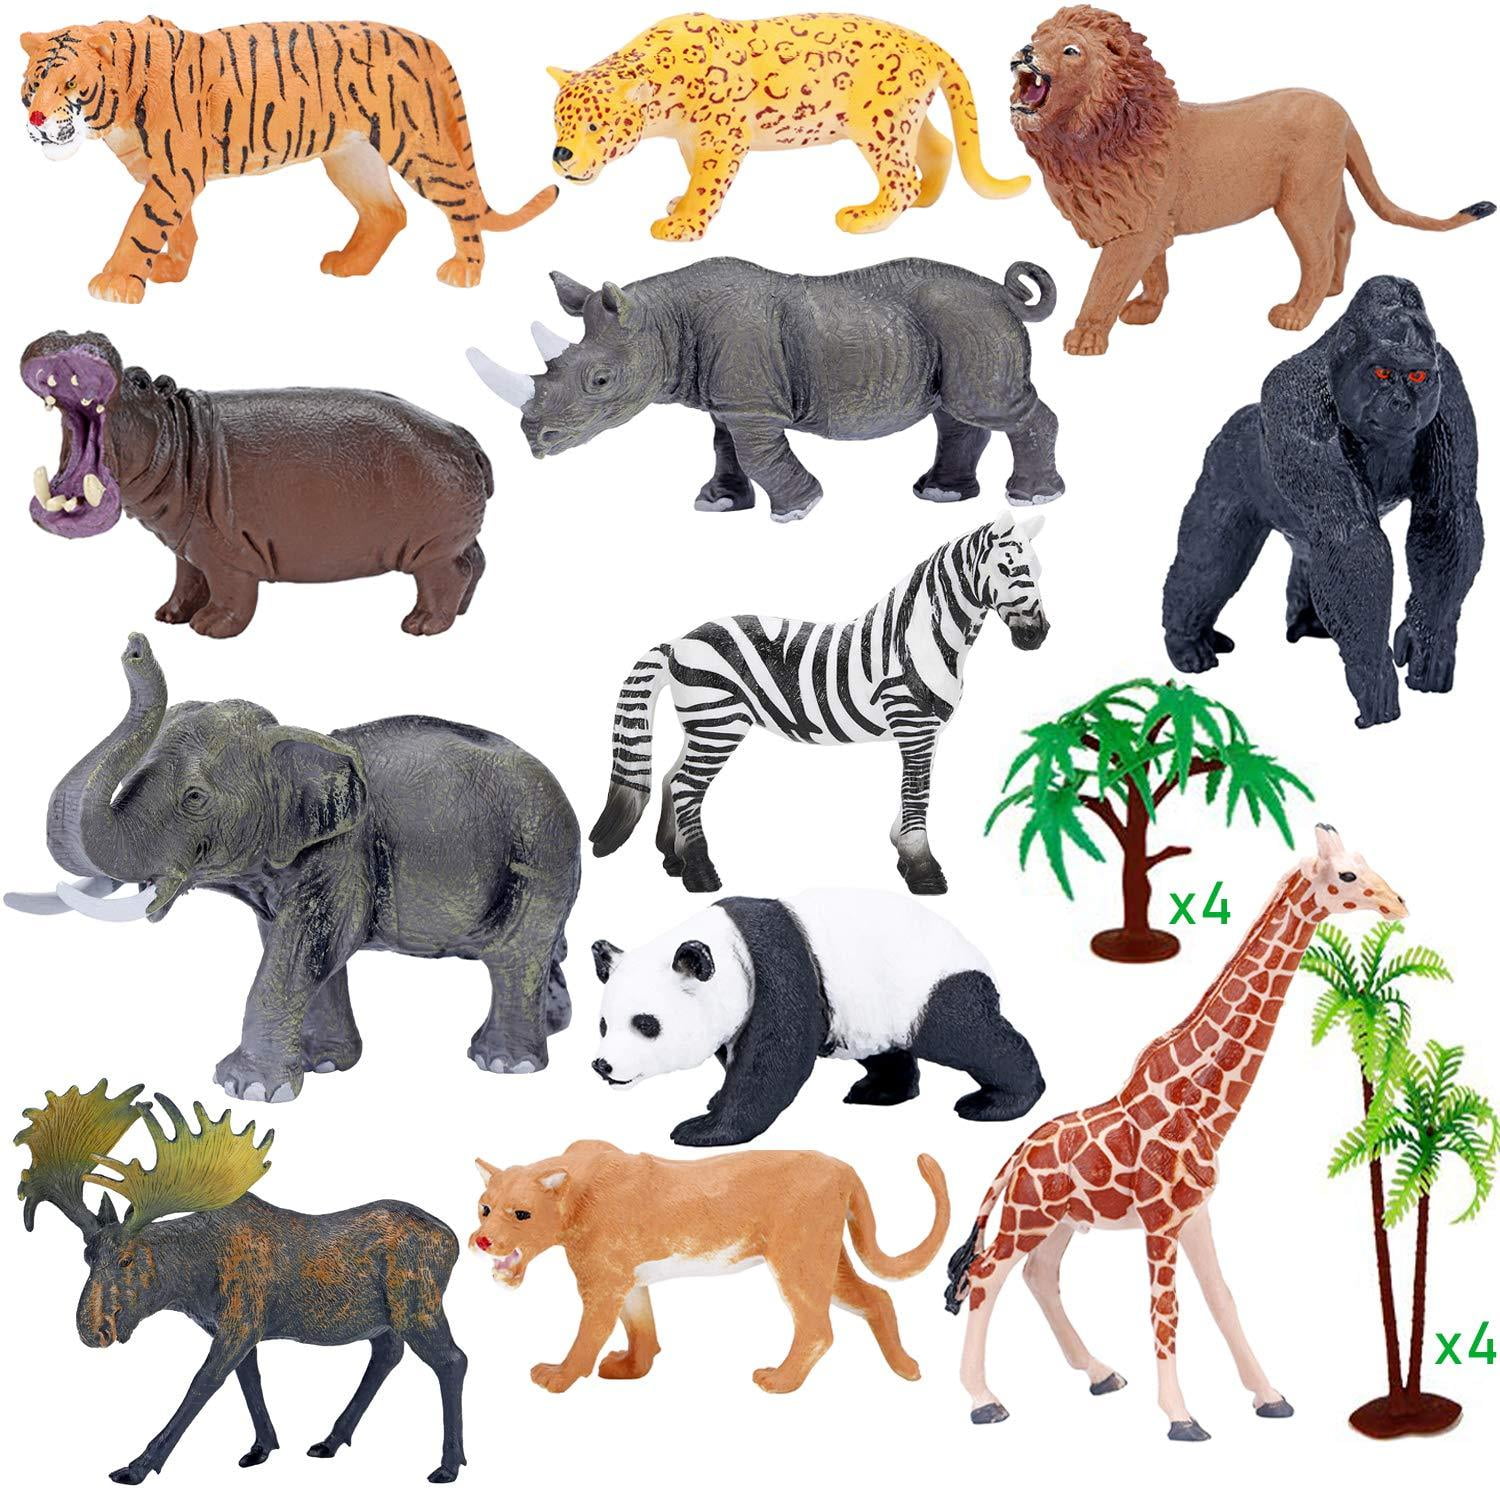 36 NEW ZOO ANIMALS 2" TOY PLAYSET WILD JUNGLE GORILLA ZEBRA TIGER LION SAFARI 